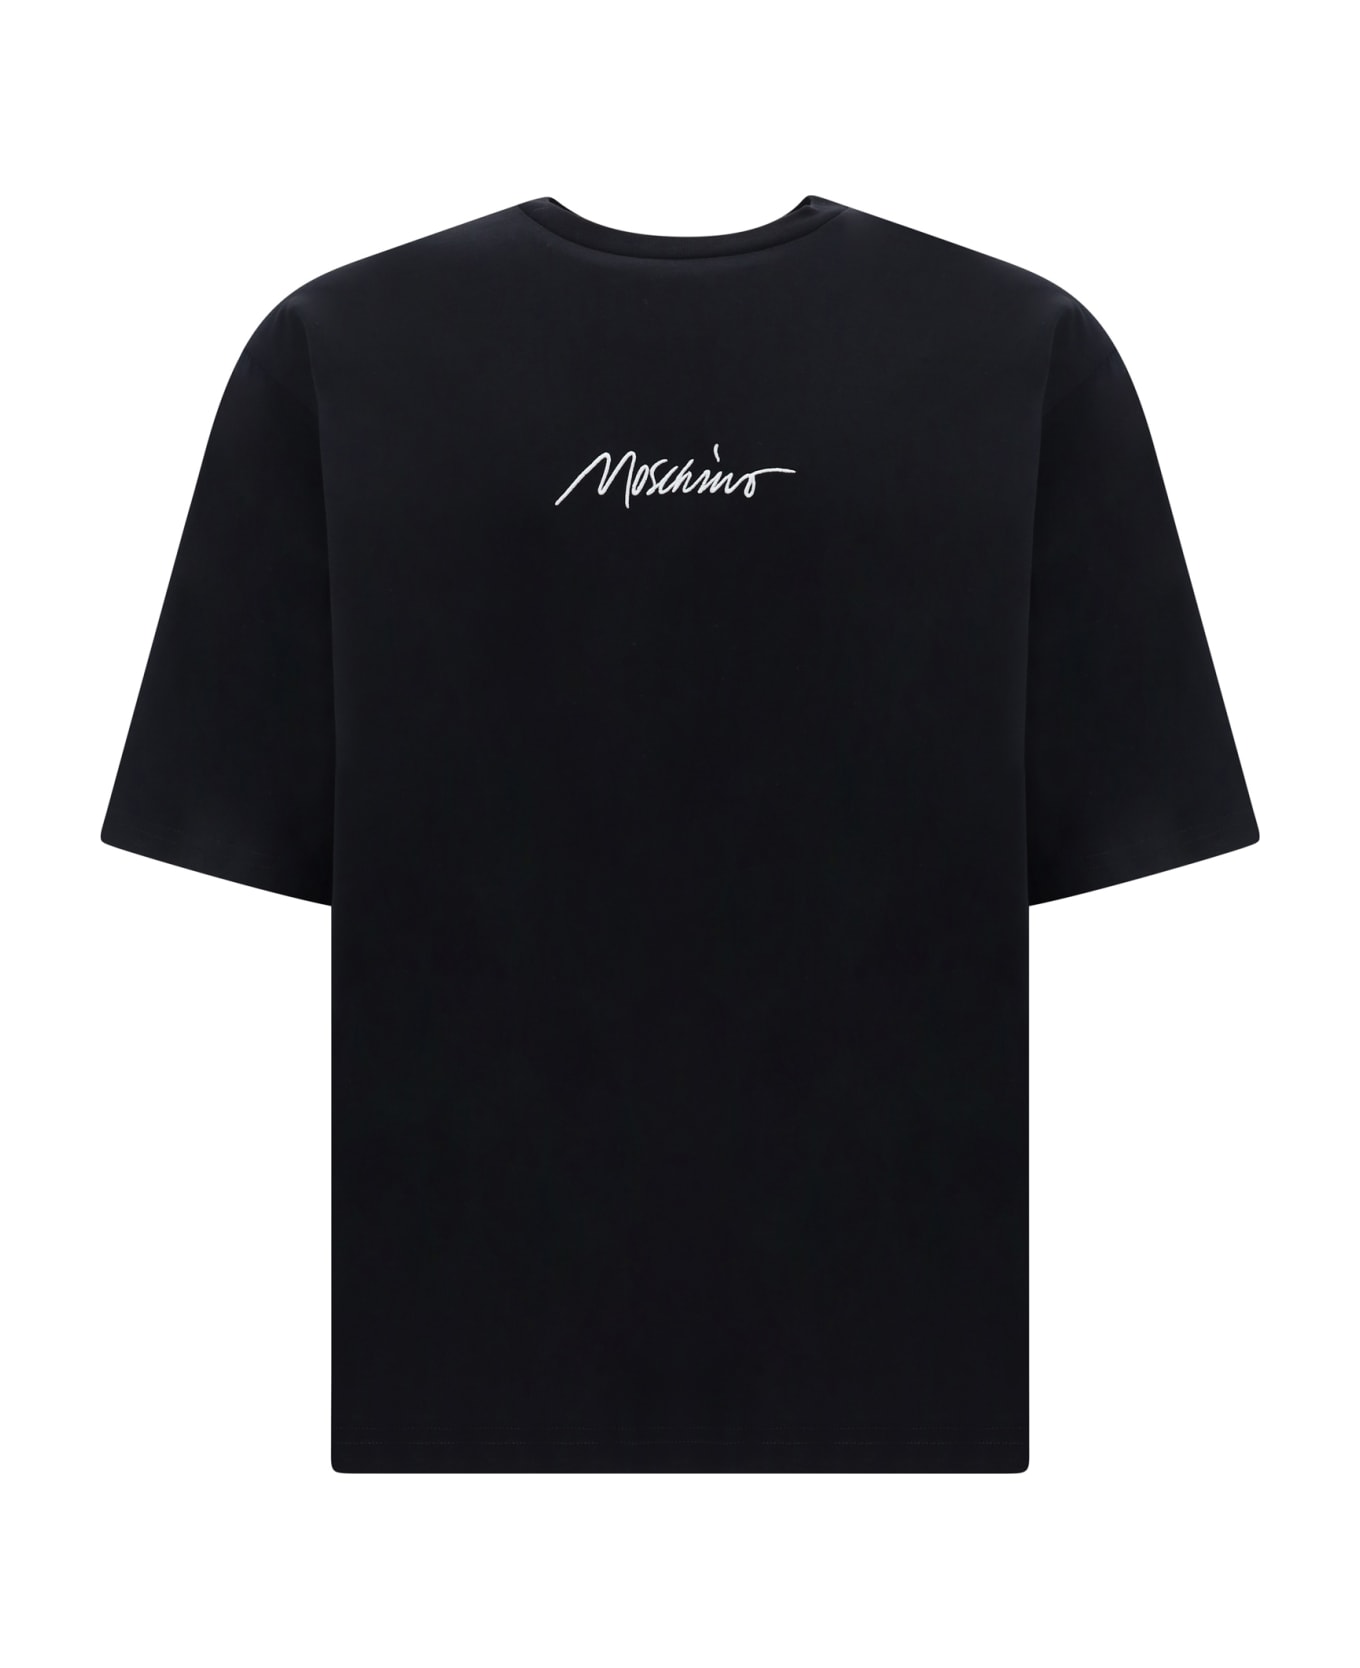 Moschino T-shirt - Black シャツ